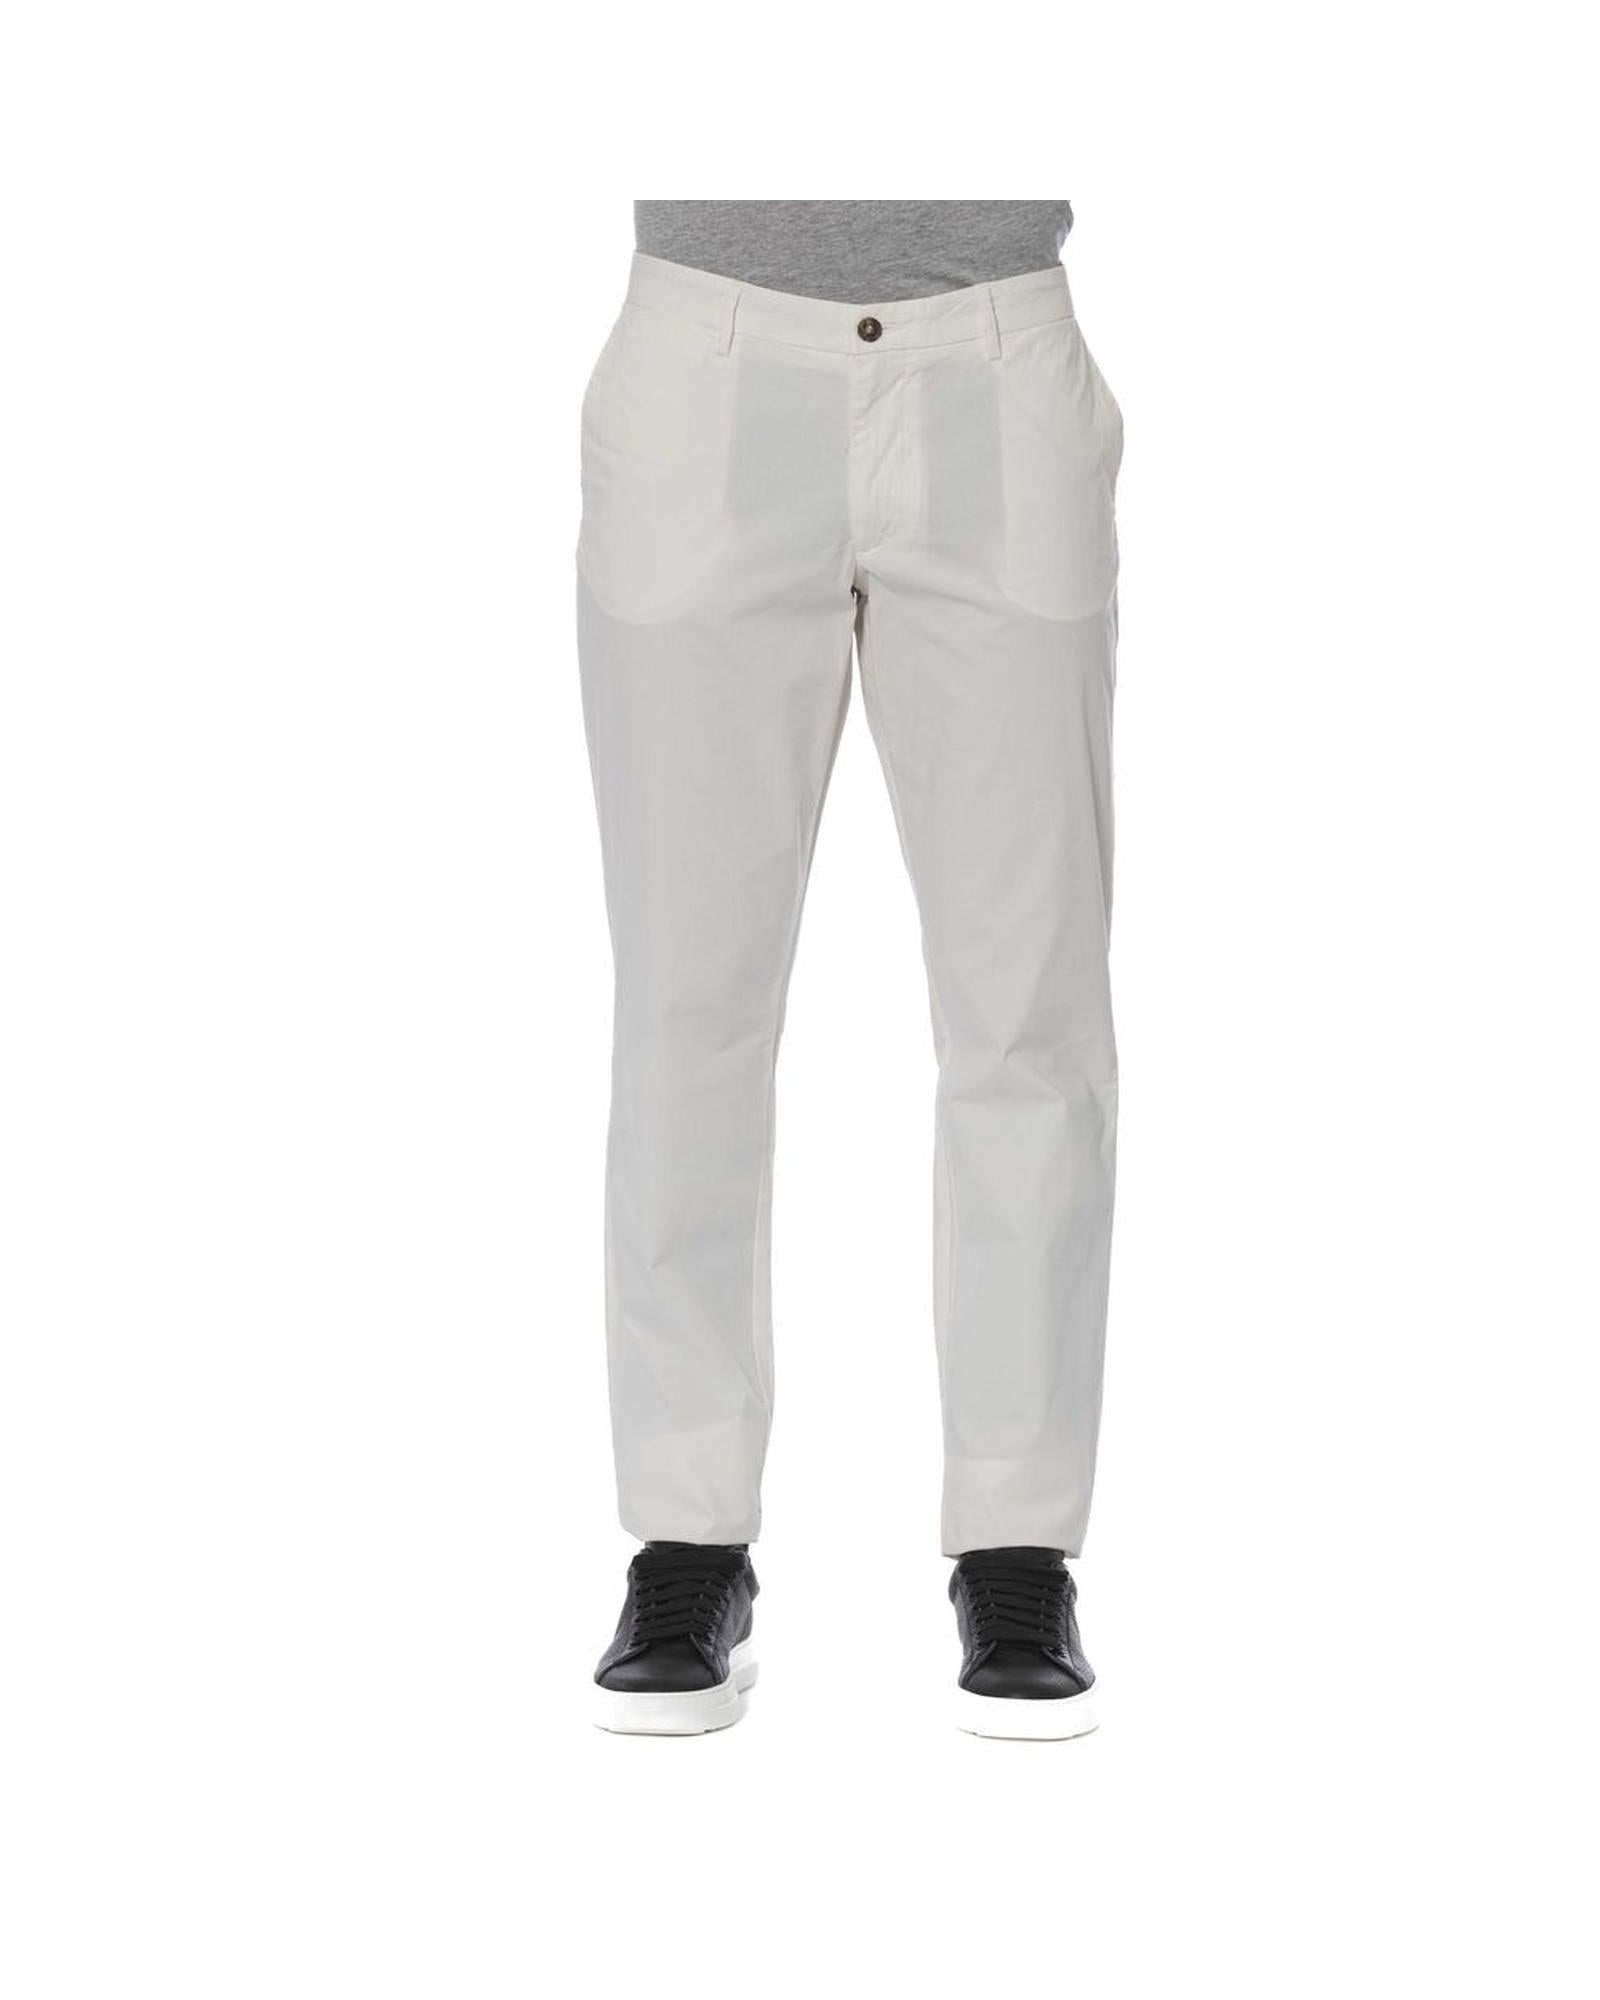 Men's White Cotton Jeans & Pant - W46 US